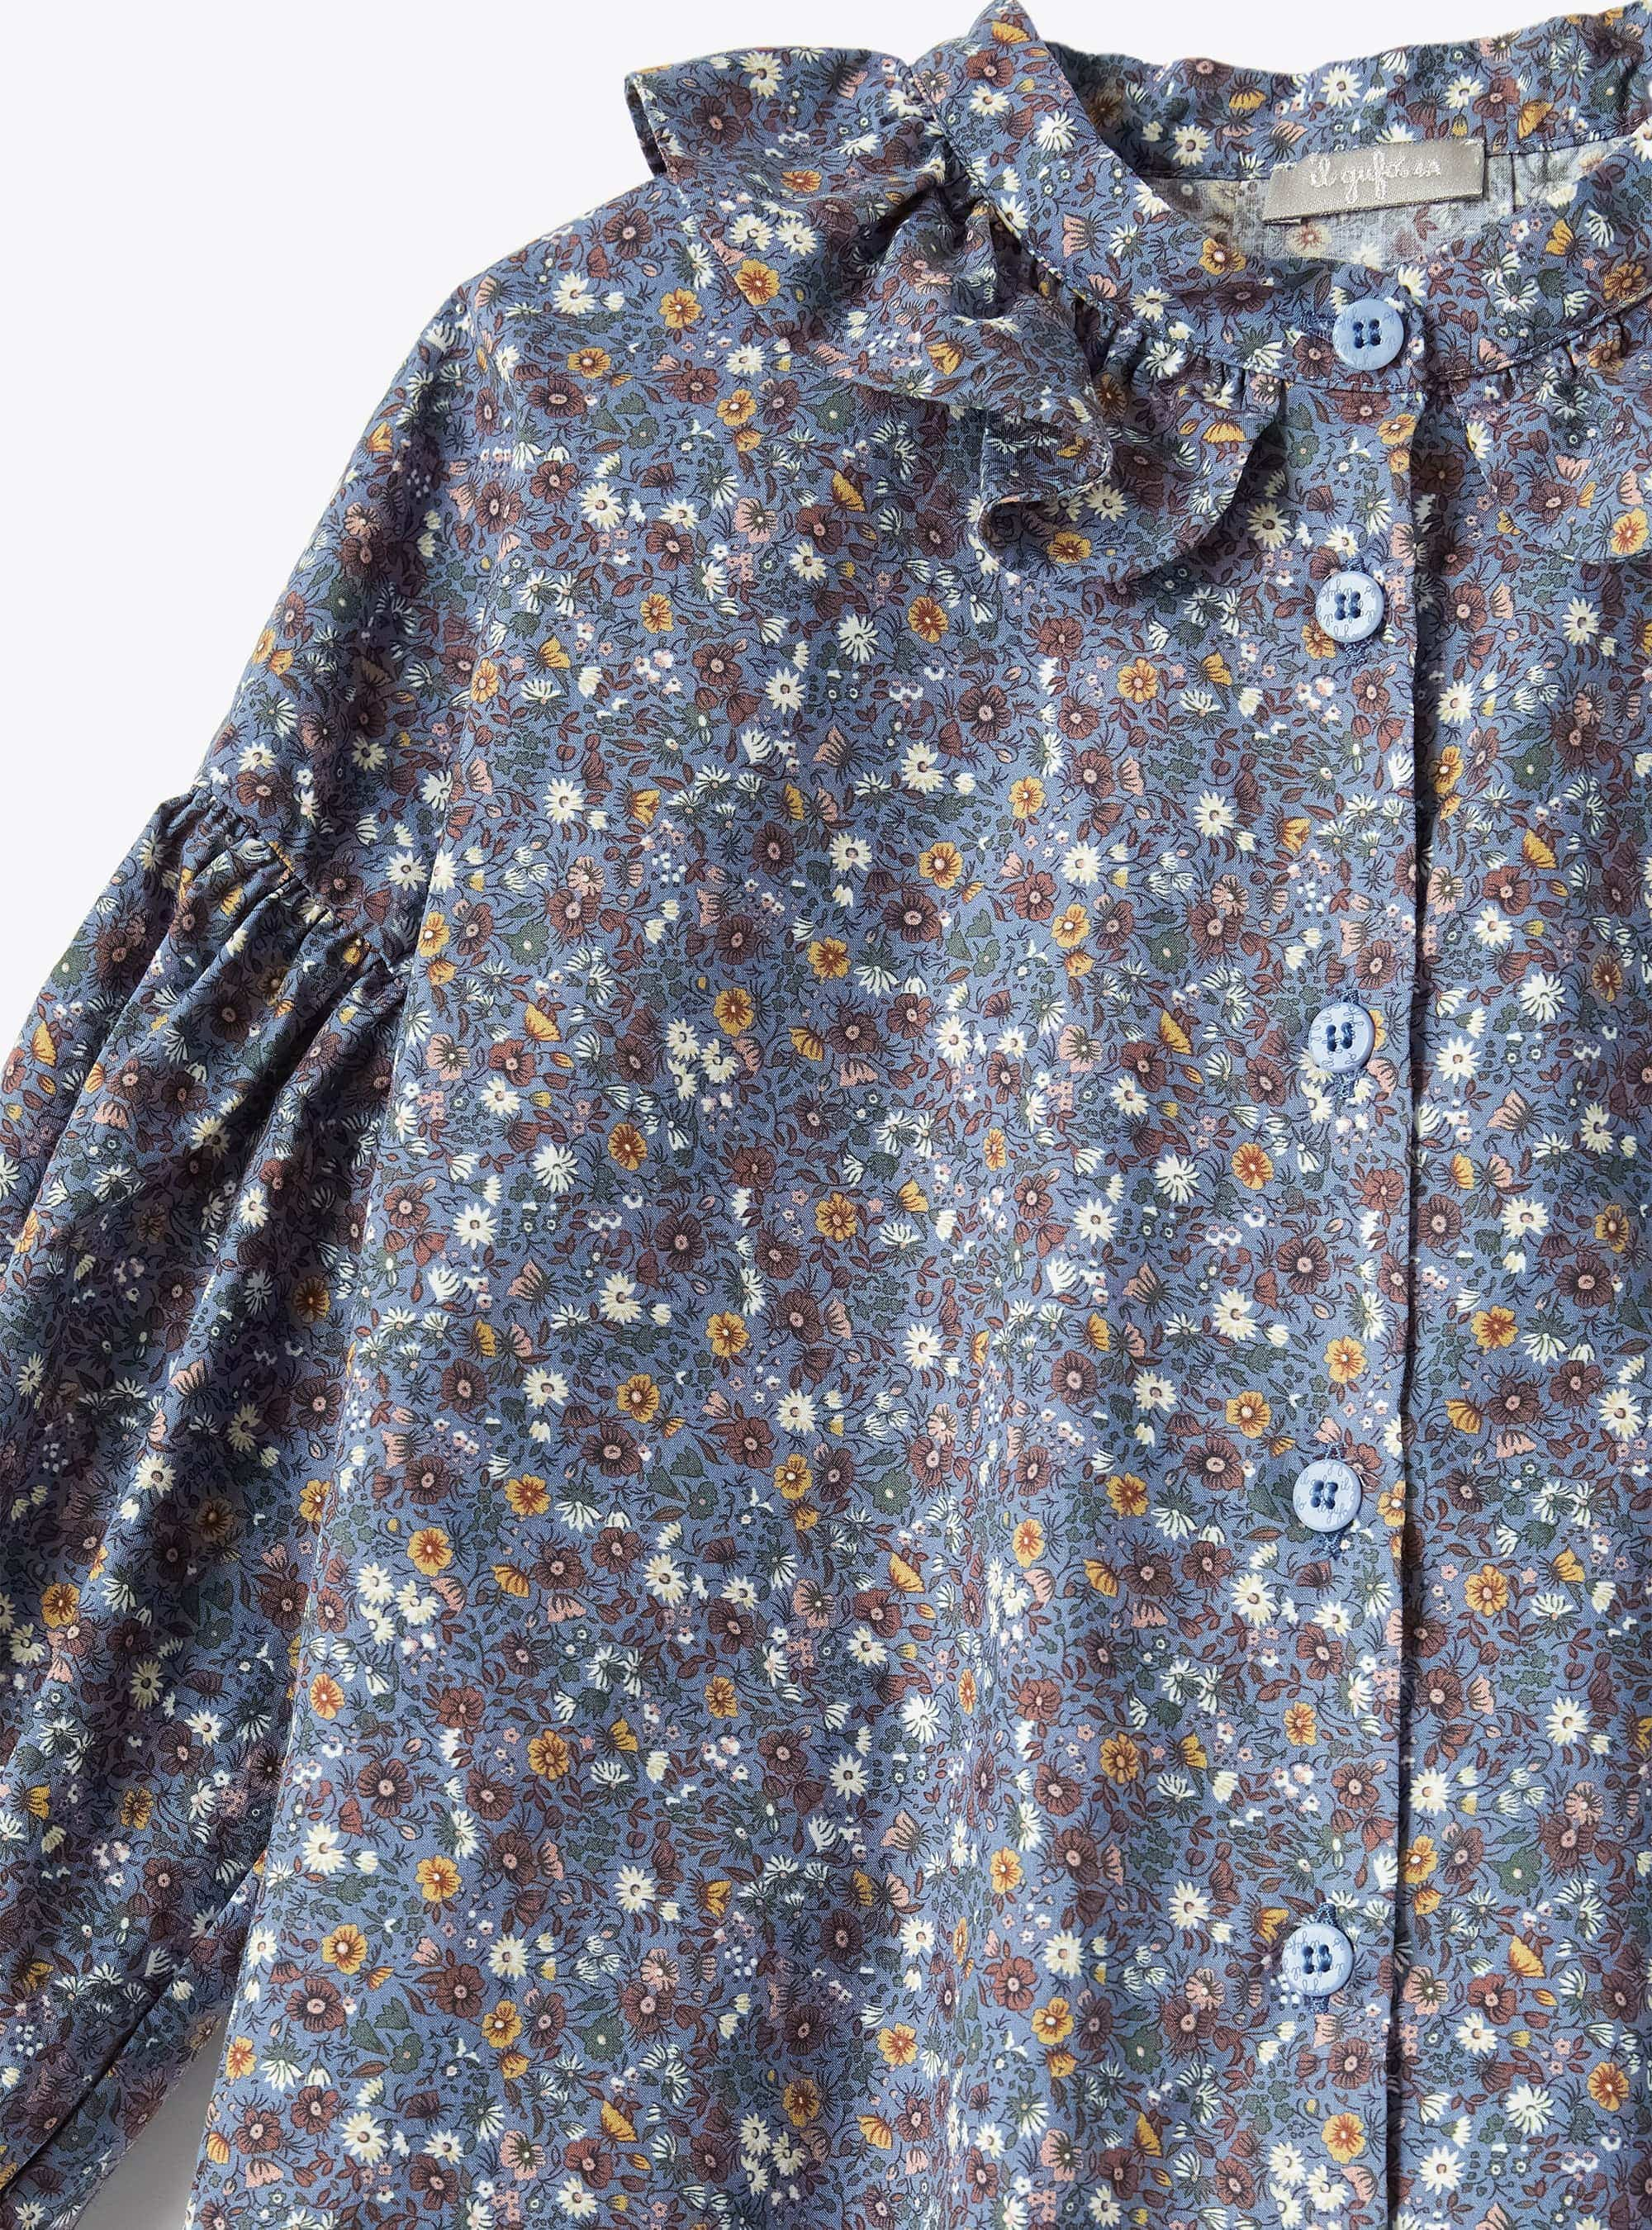 Floral print ruffle blouse - Blue | Il Gufo